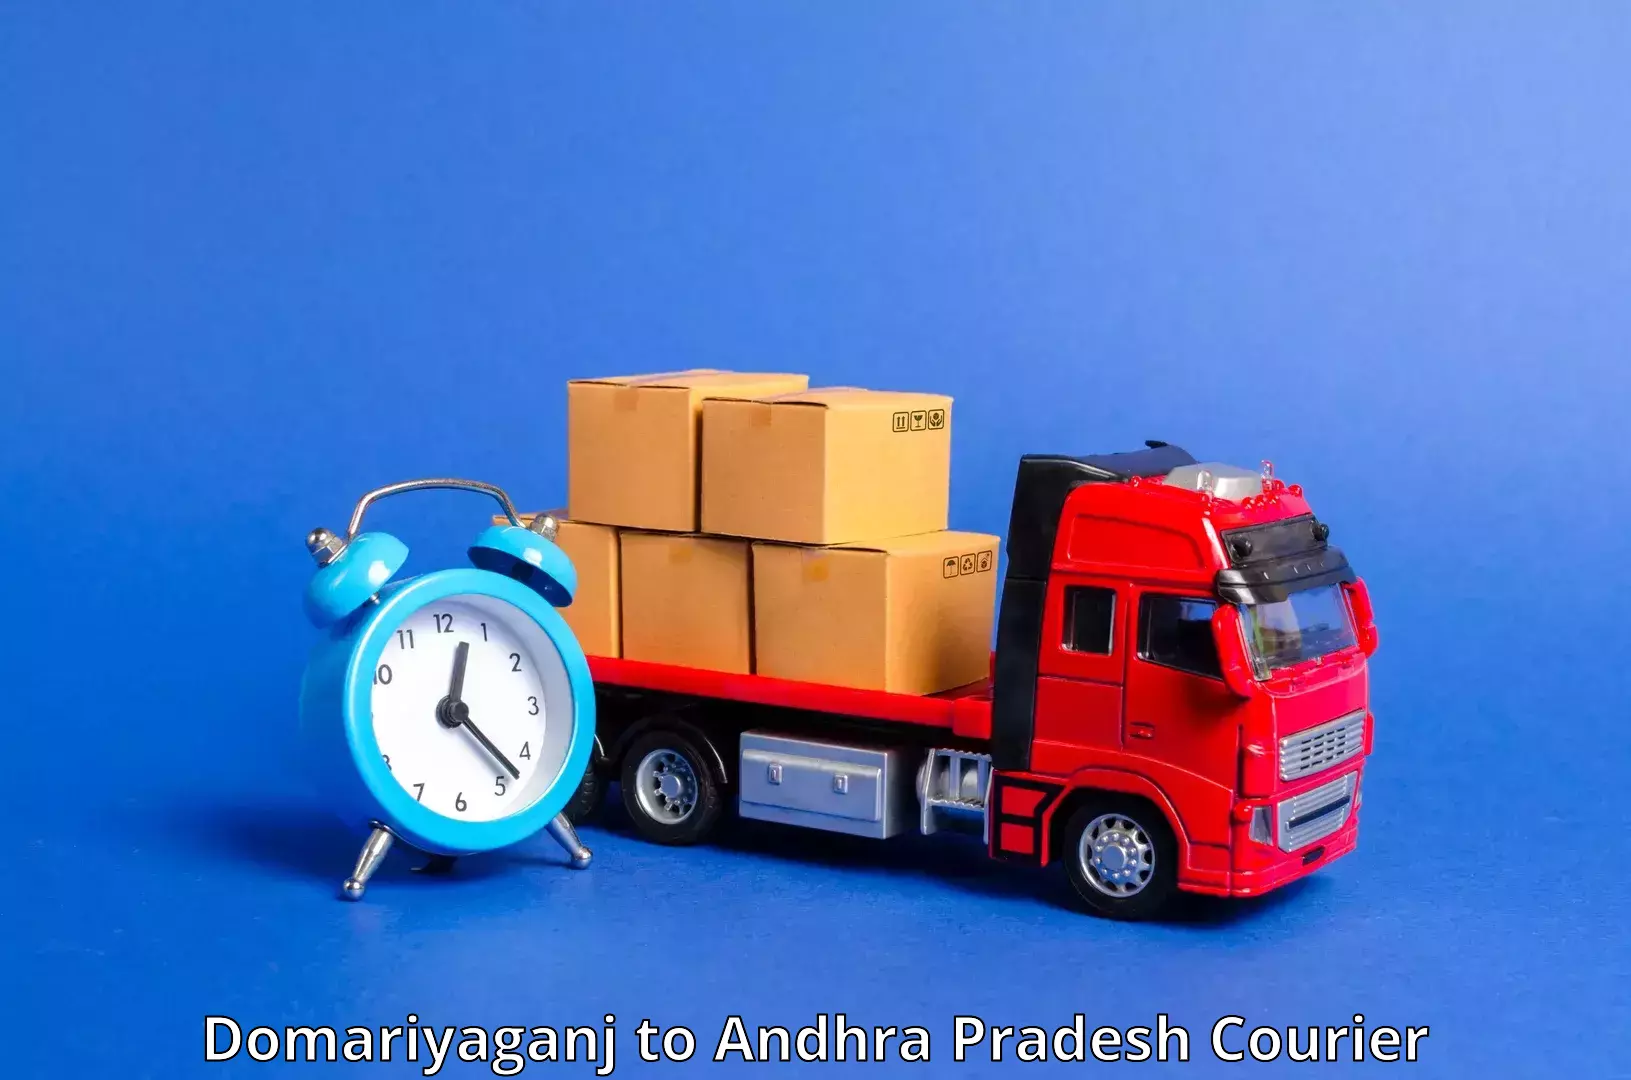 Local delivery service Domariyaganj to Devarapalli